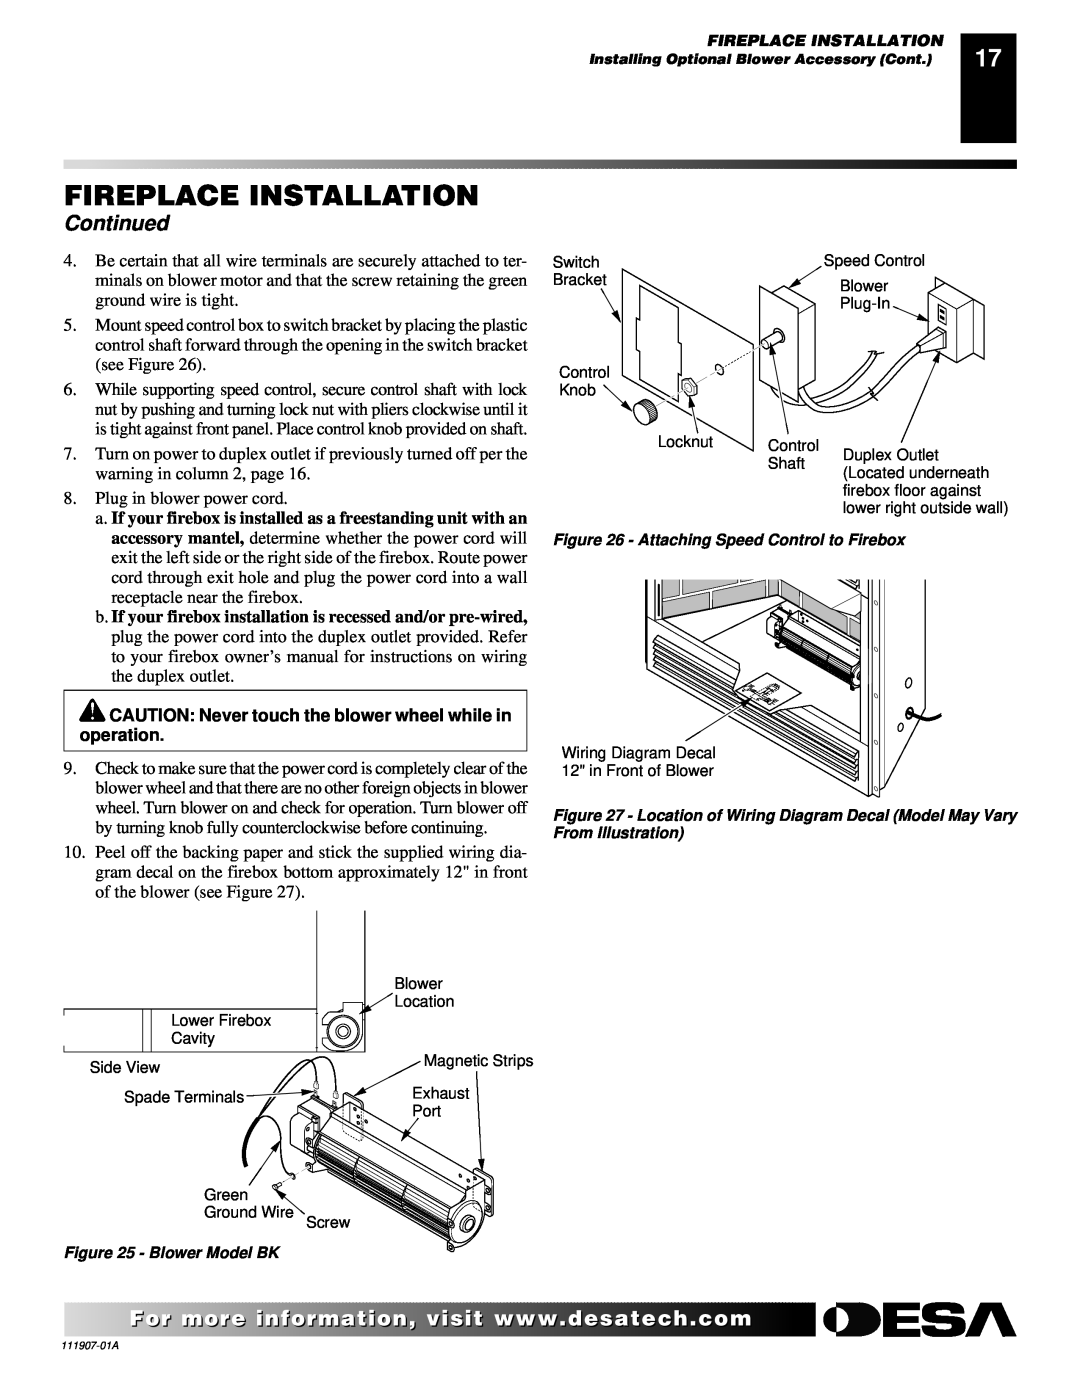 Desa (V)V42EPA(1), (V)V42ENA(1) installation manual Fireplace Installation, Continued, Plug in blower power cord 